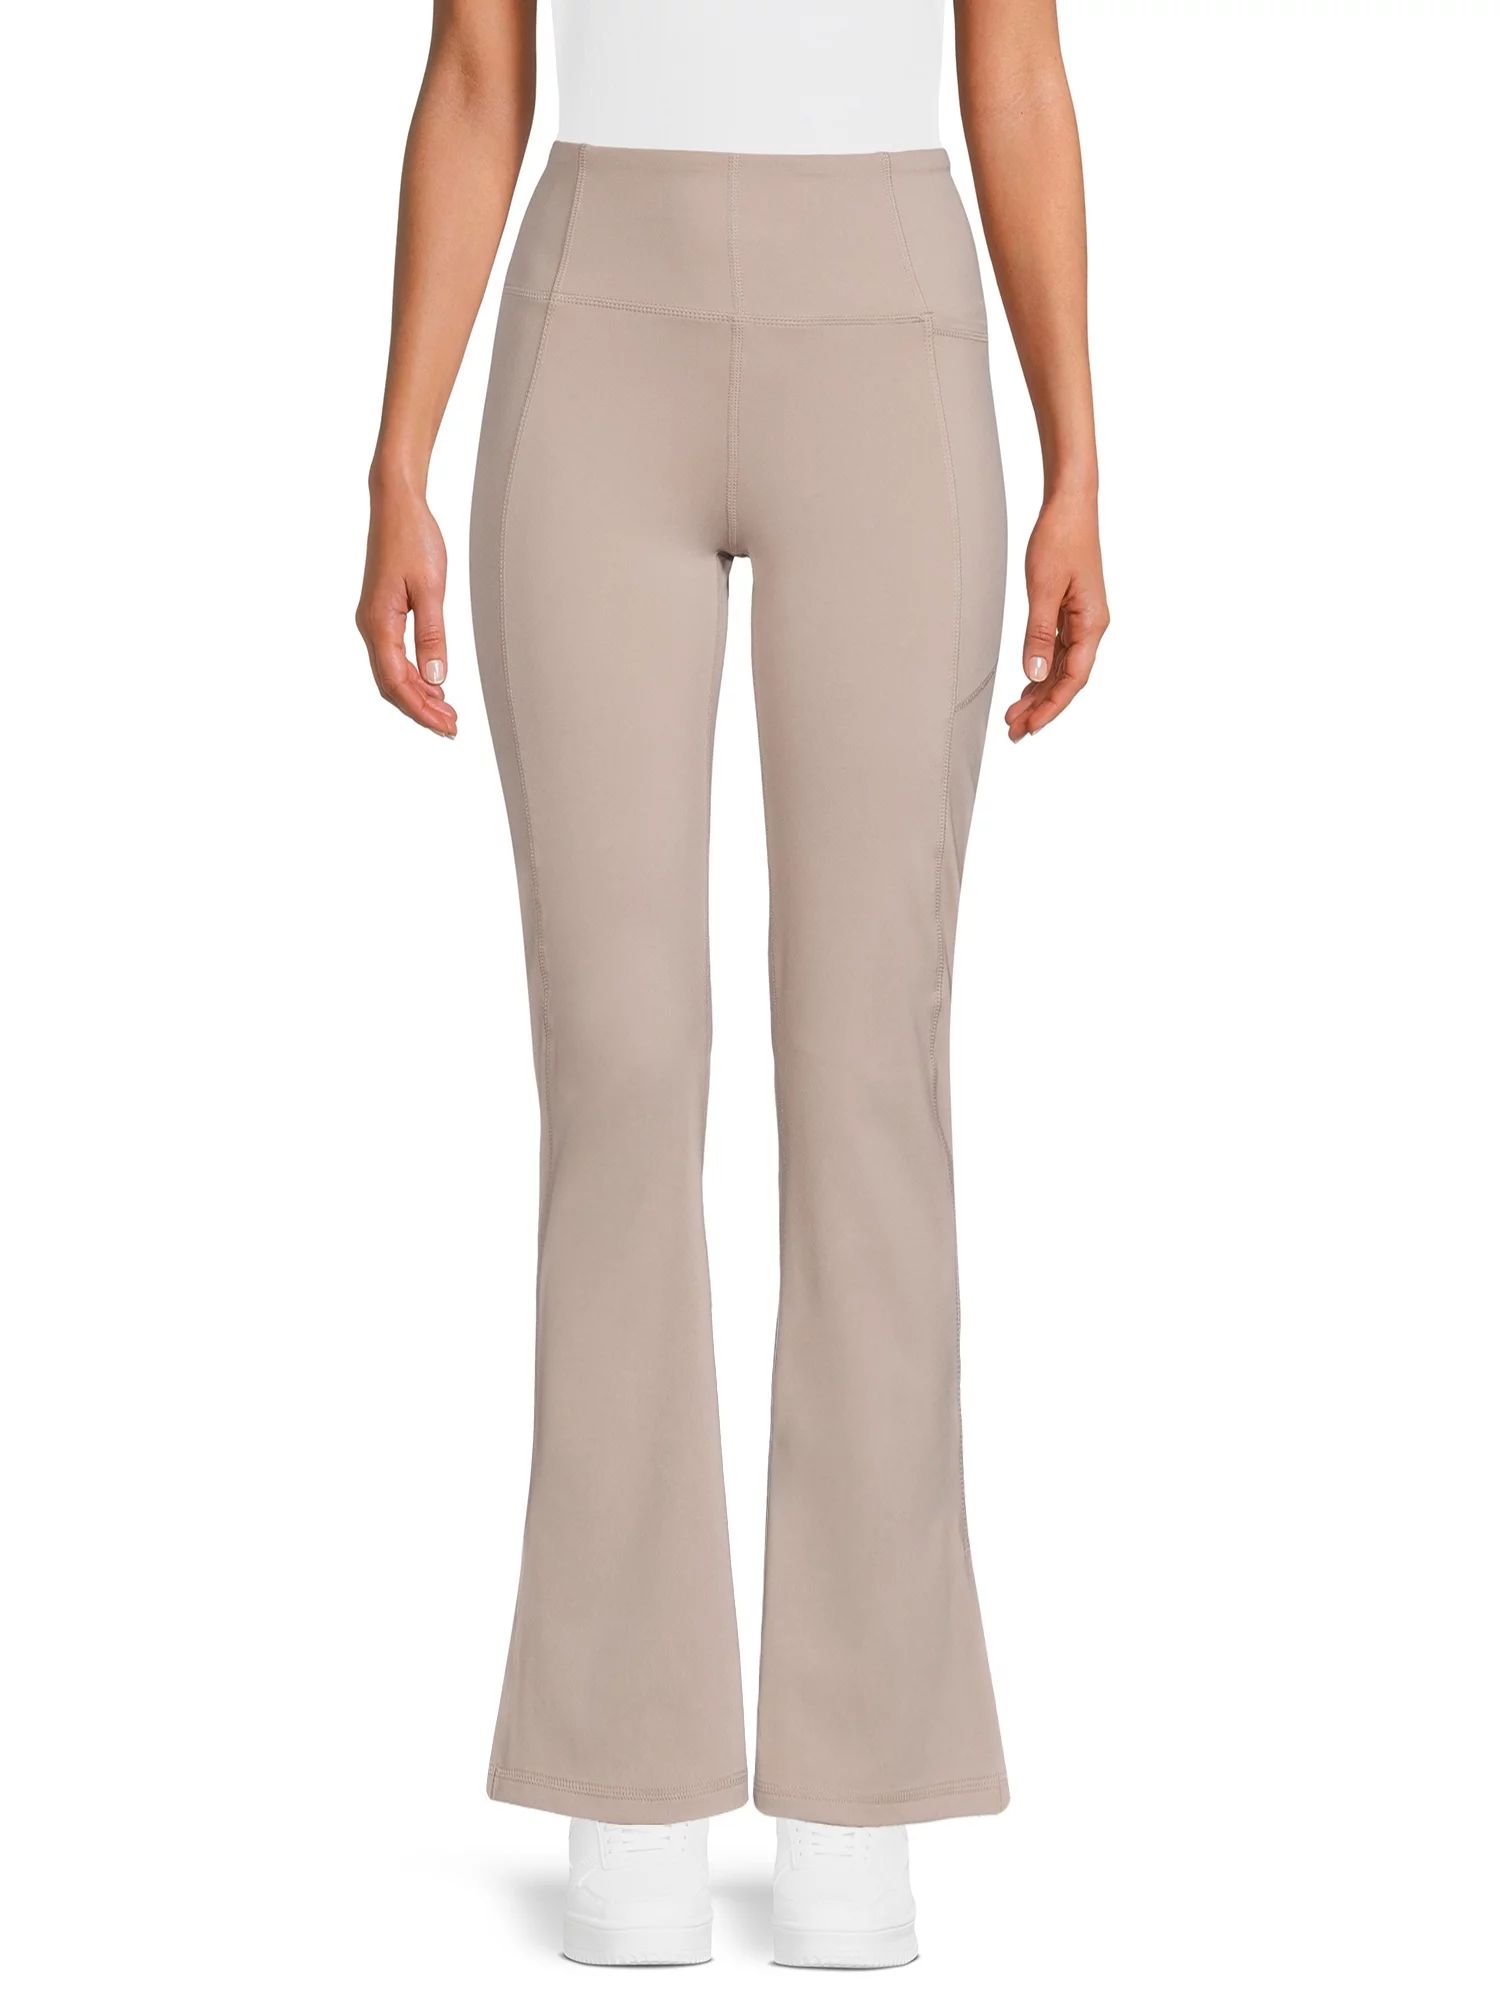 Avia Women's Flare Pants, Sizes XS-3XL | Walmart (US)